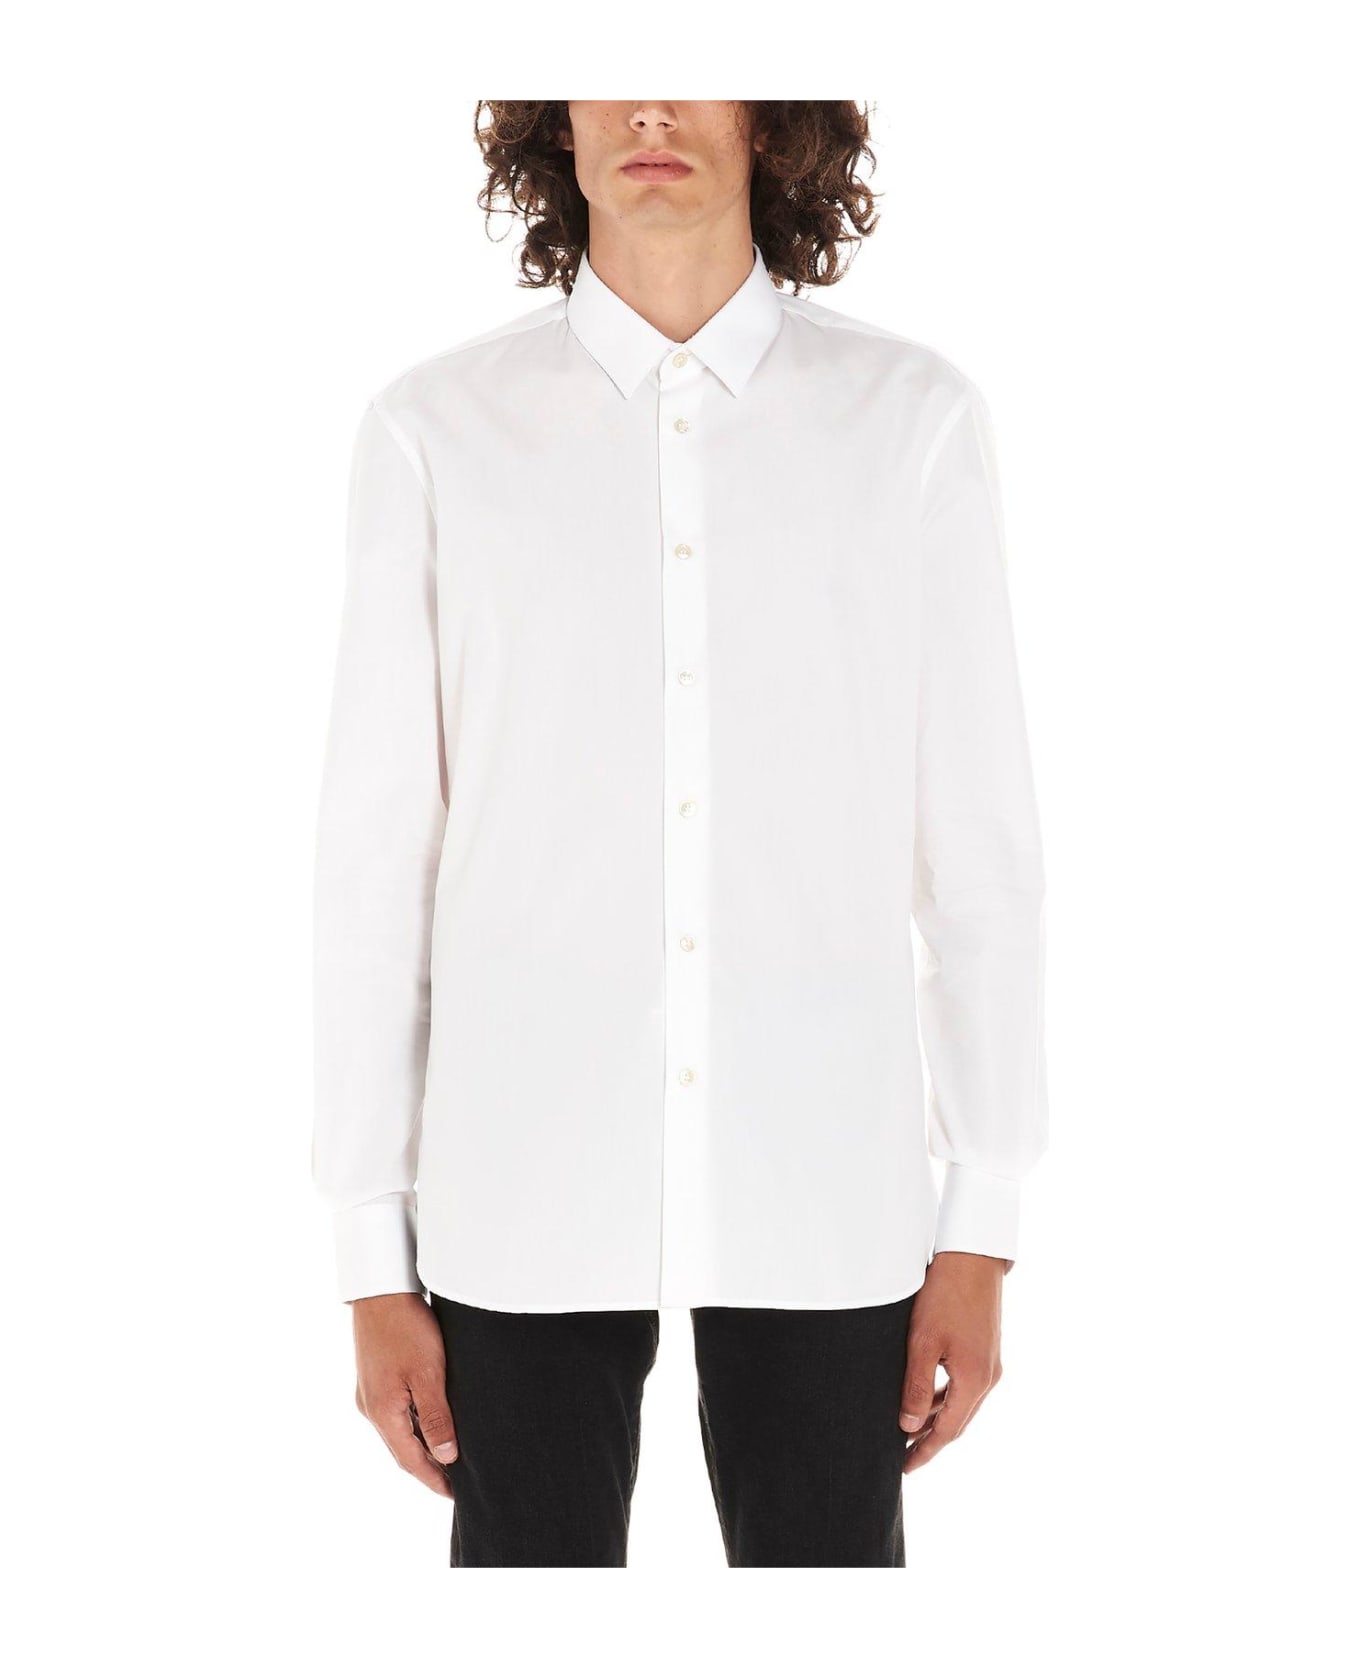 Saint Laurent Slim Fit Long-sleeved Shirt